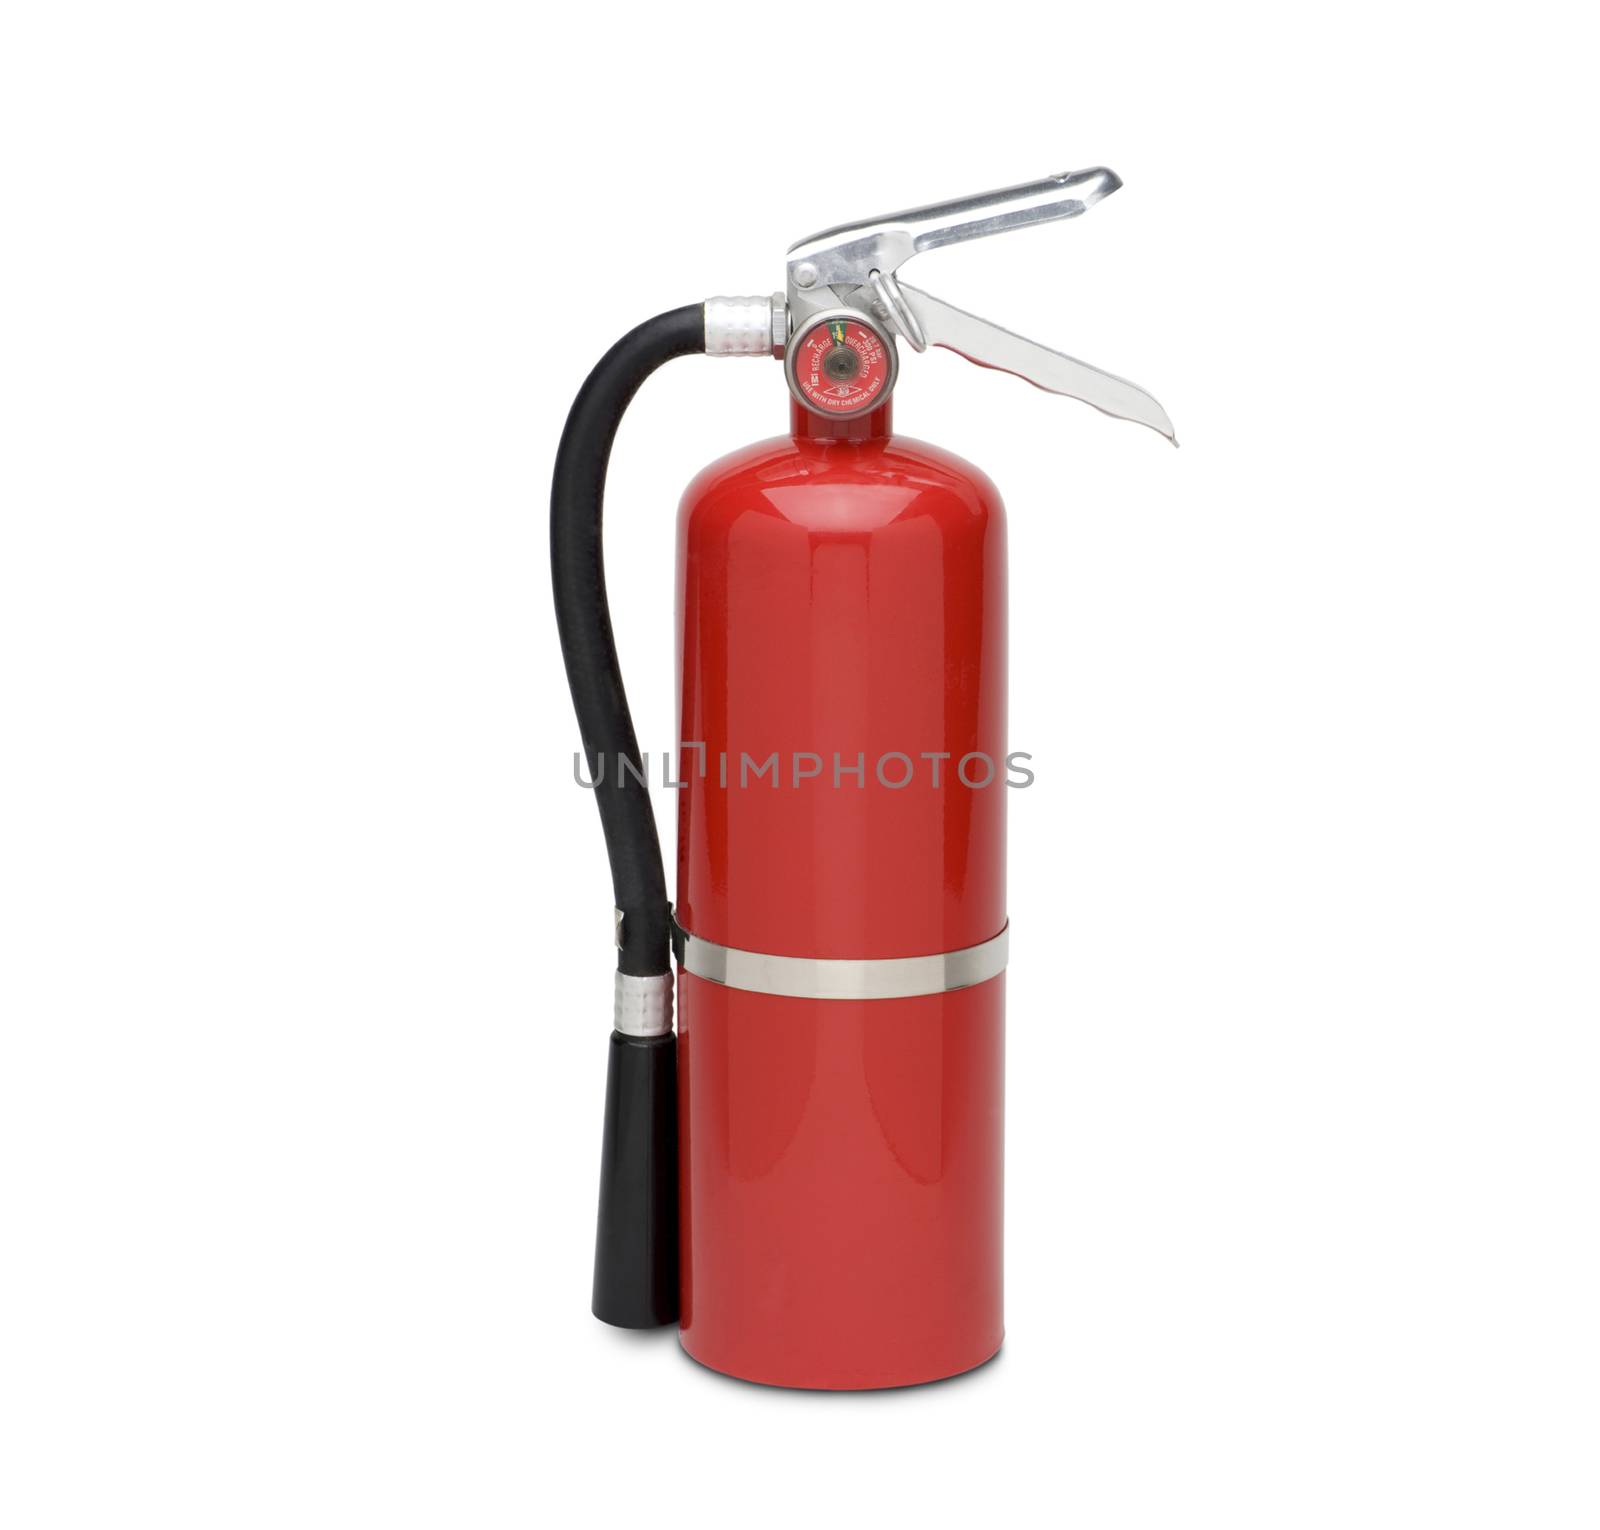 Fire Extinguisher by ozaiachin